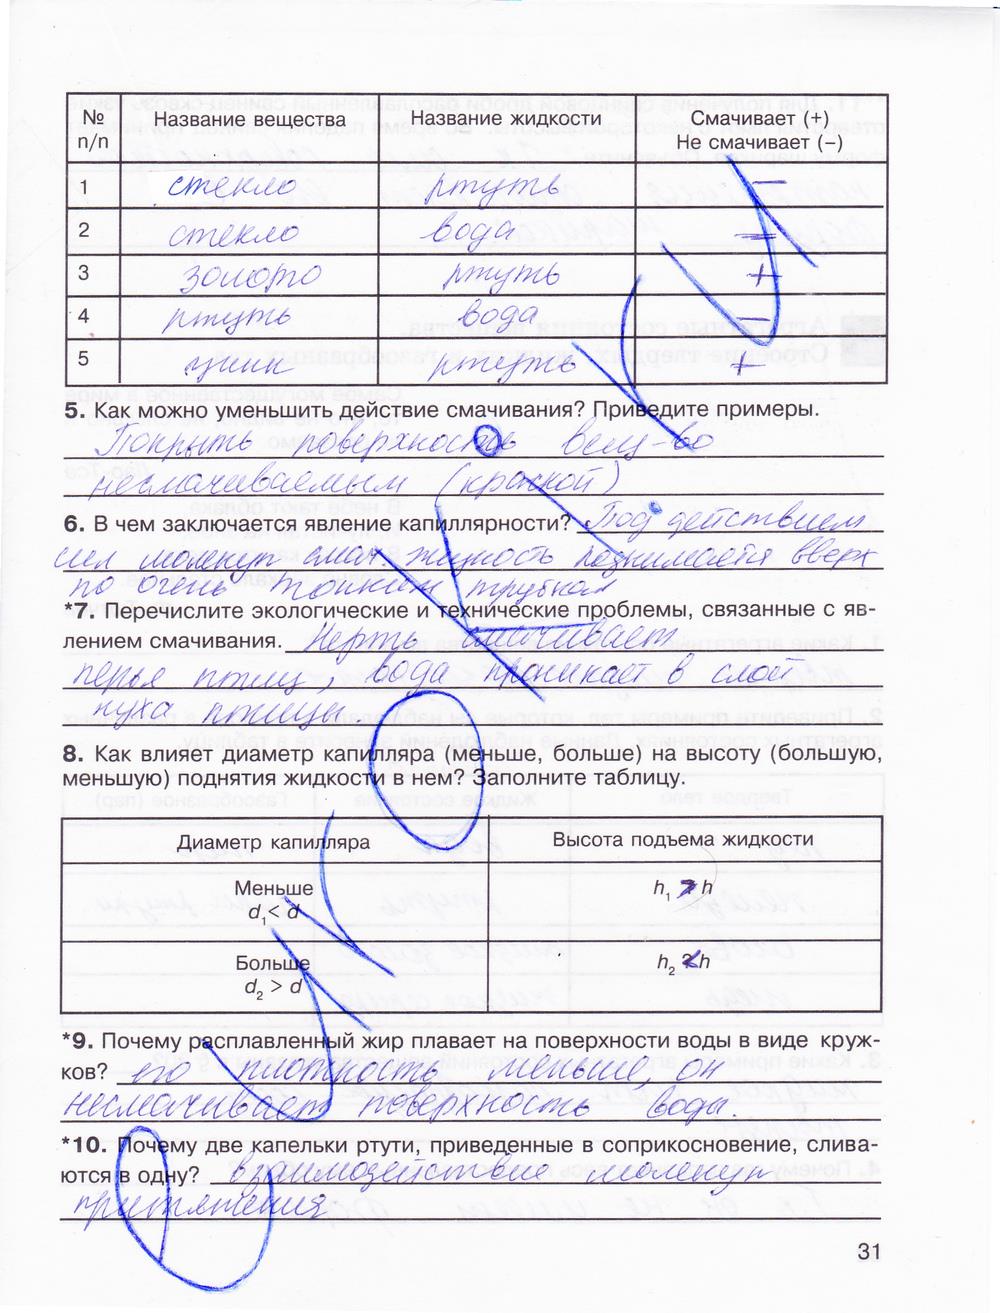 гдз 7 класс рабочая тетрадь страница 31 физика Мартынова, Бовин, Коротаев